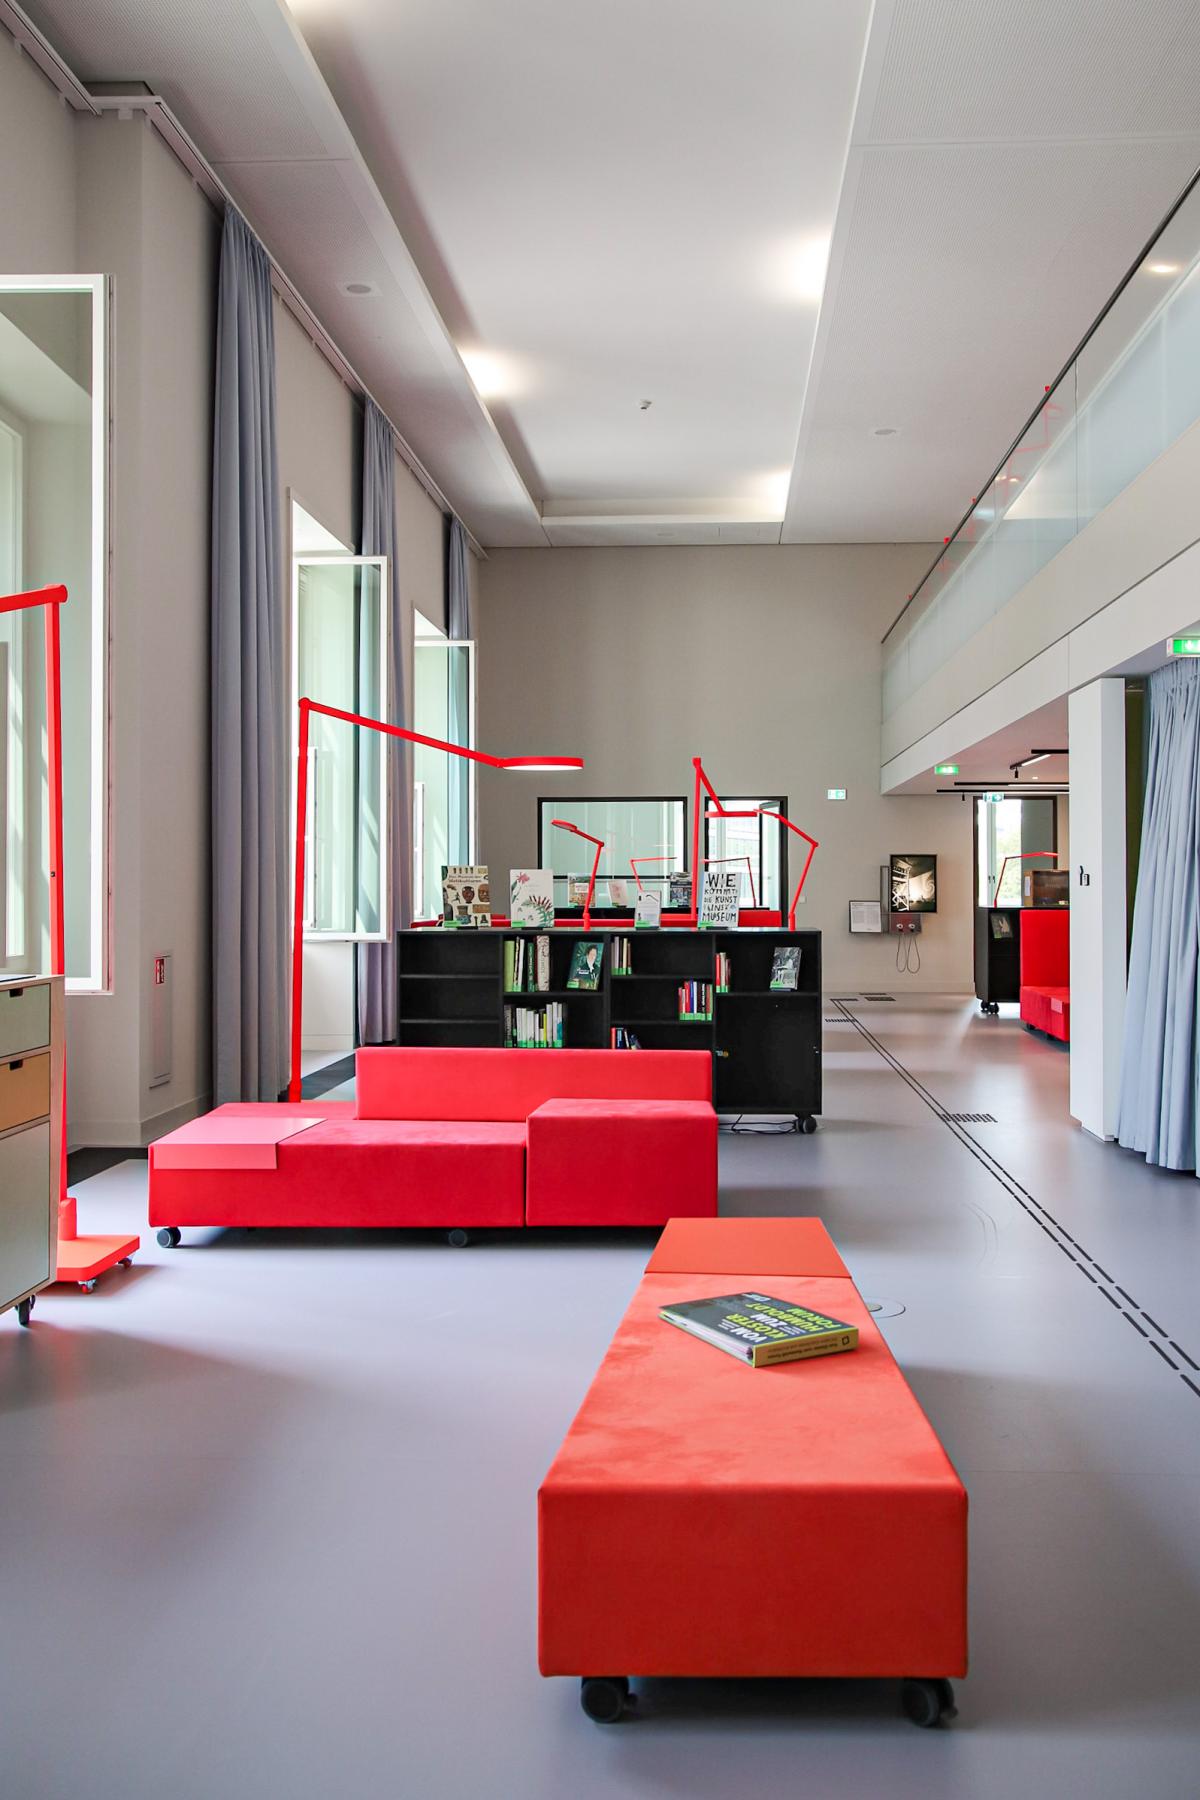 Humboldt Academy | Holzer Kobler Architekturen